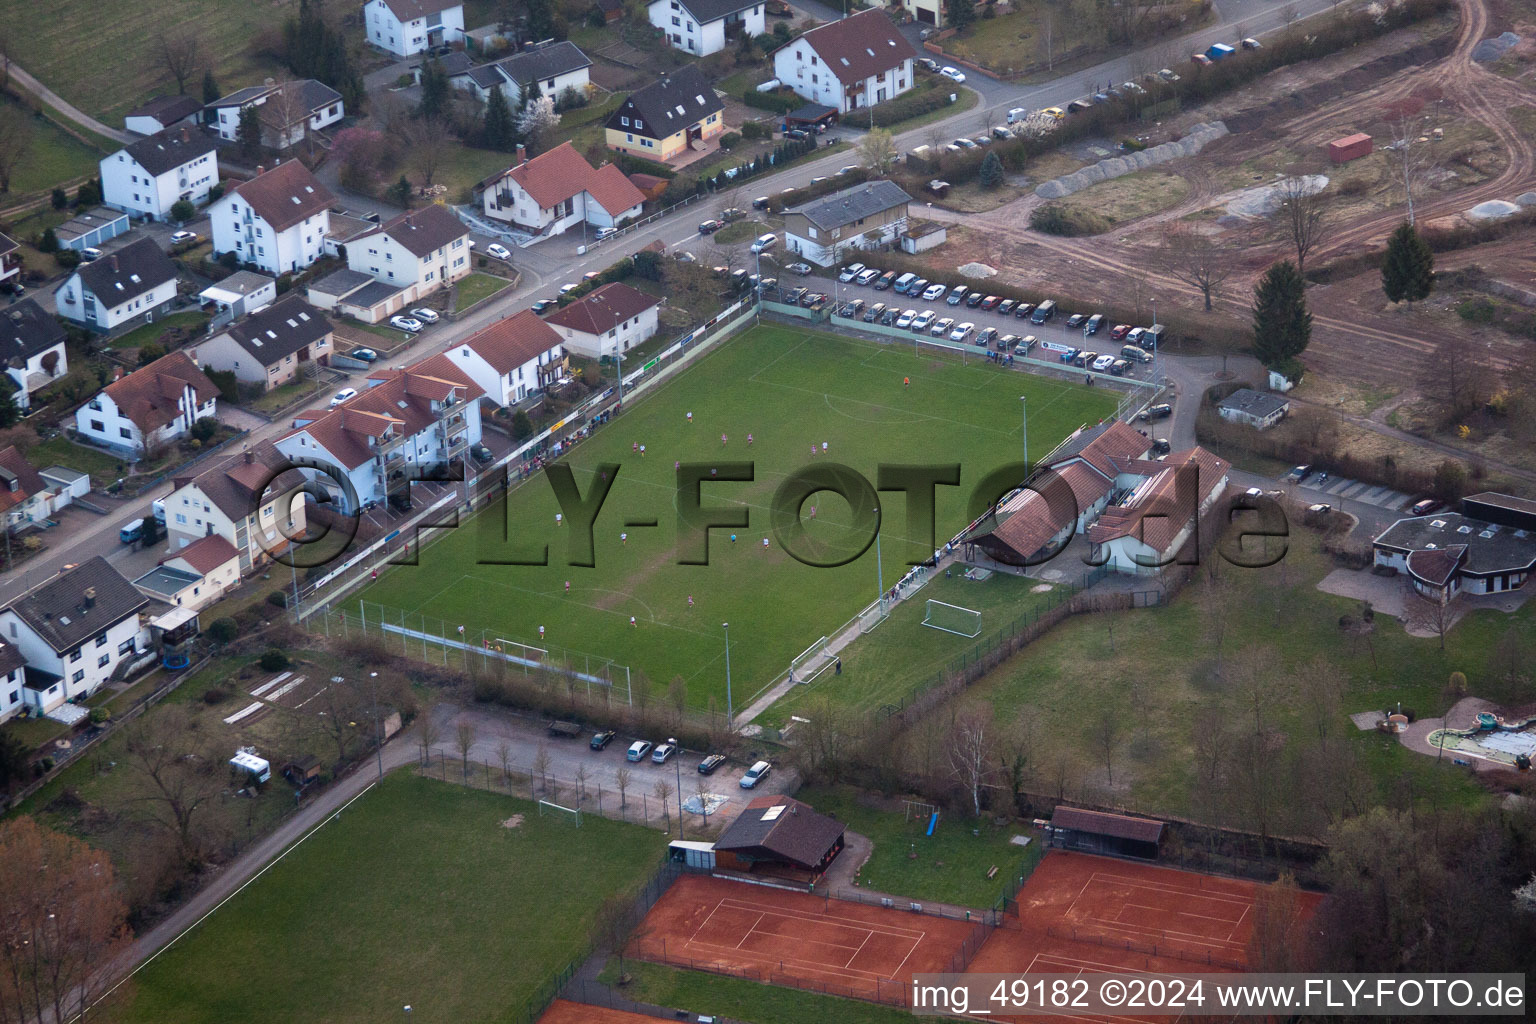 Sports fields in the district Ingenheim in Billigheim-Ingenheim in the state Rhineland-Palatinate, Germany from above